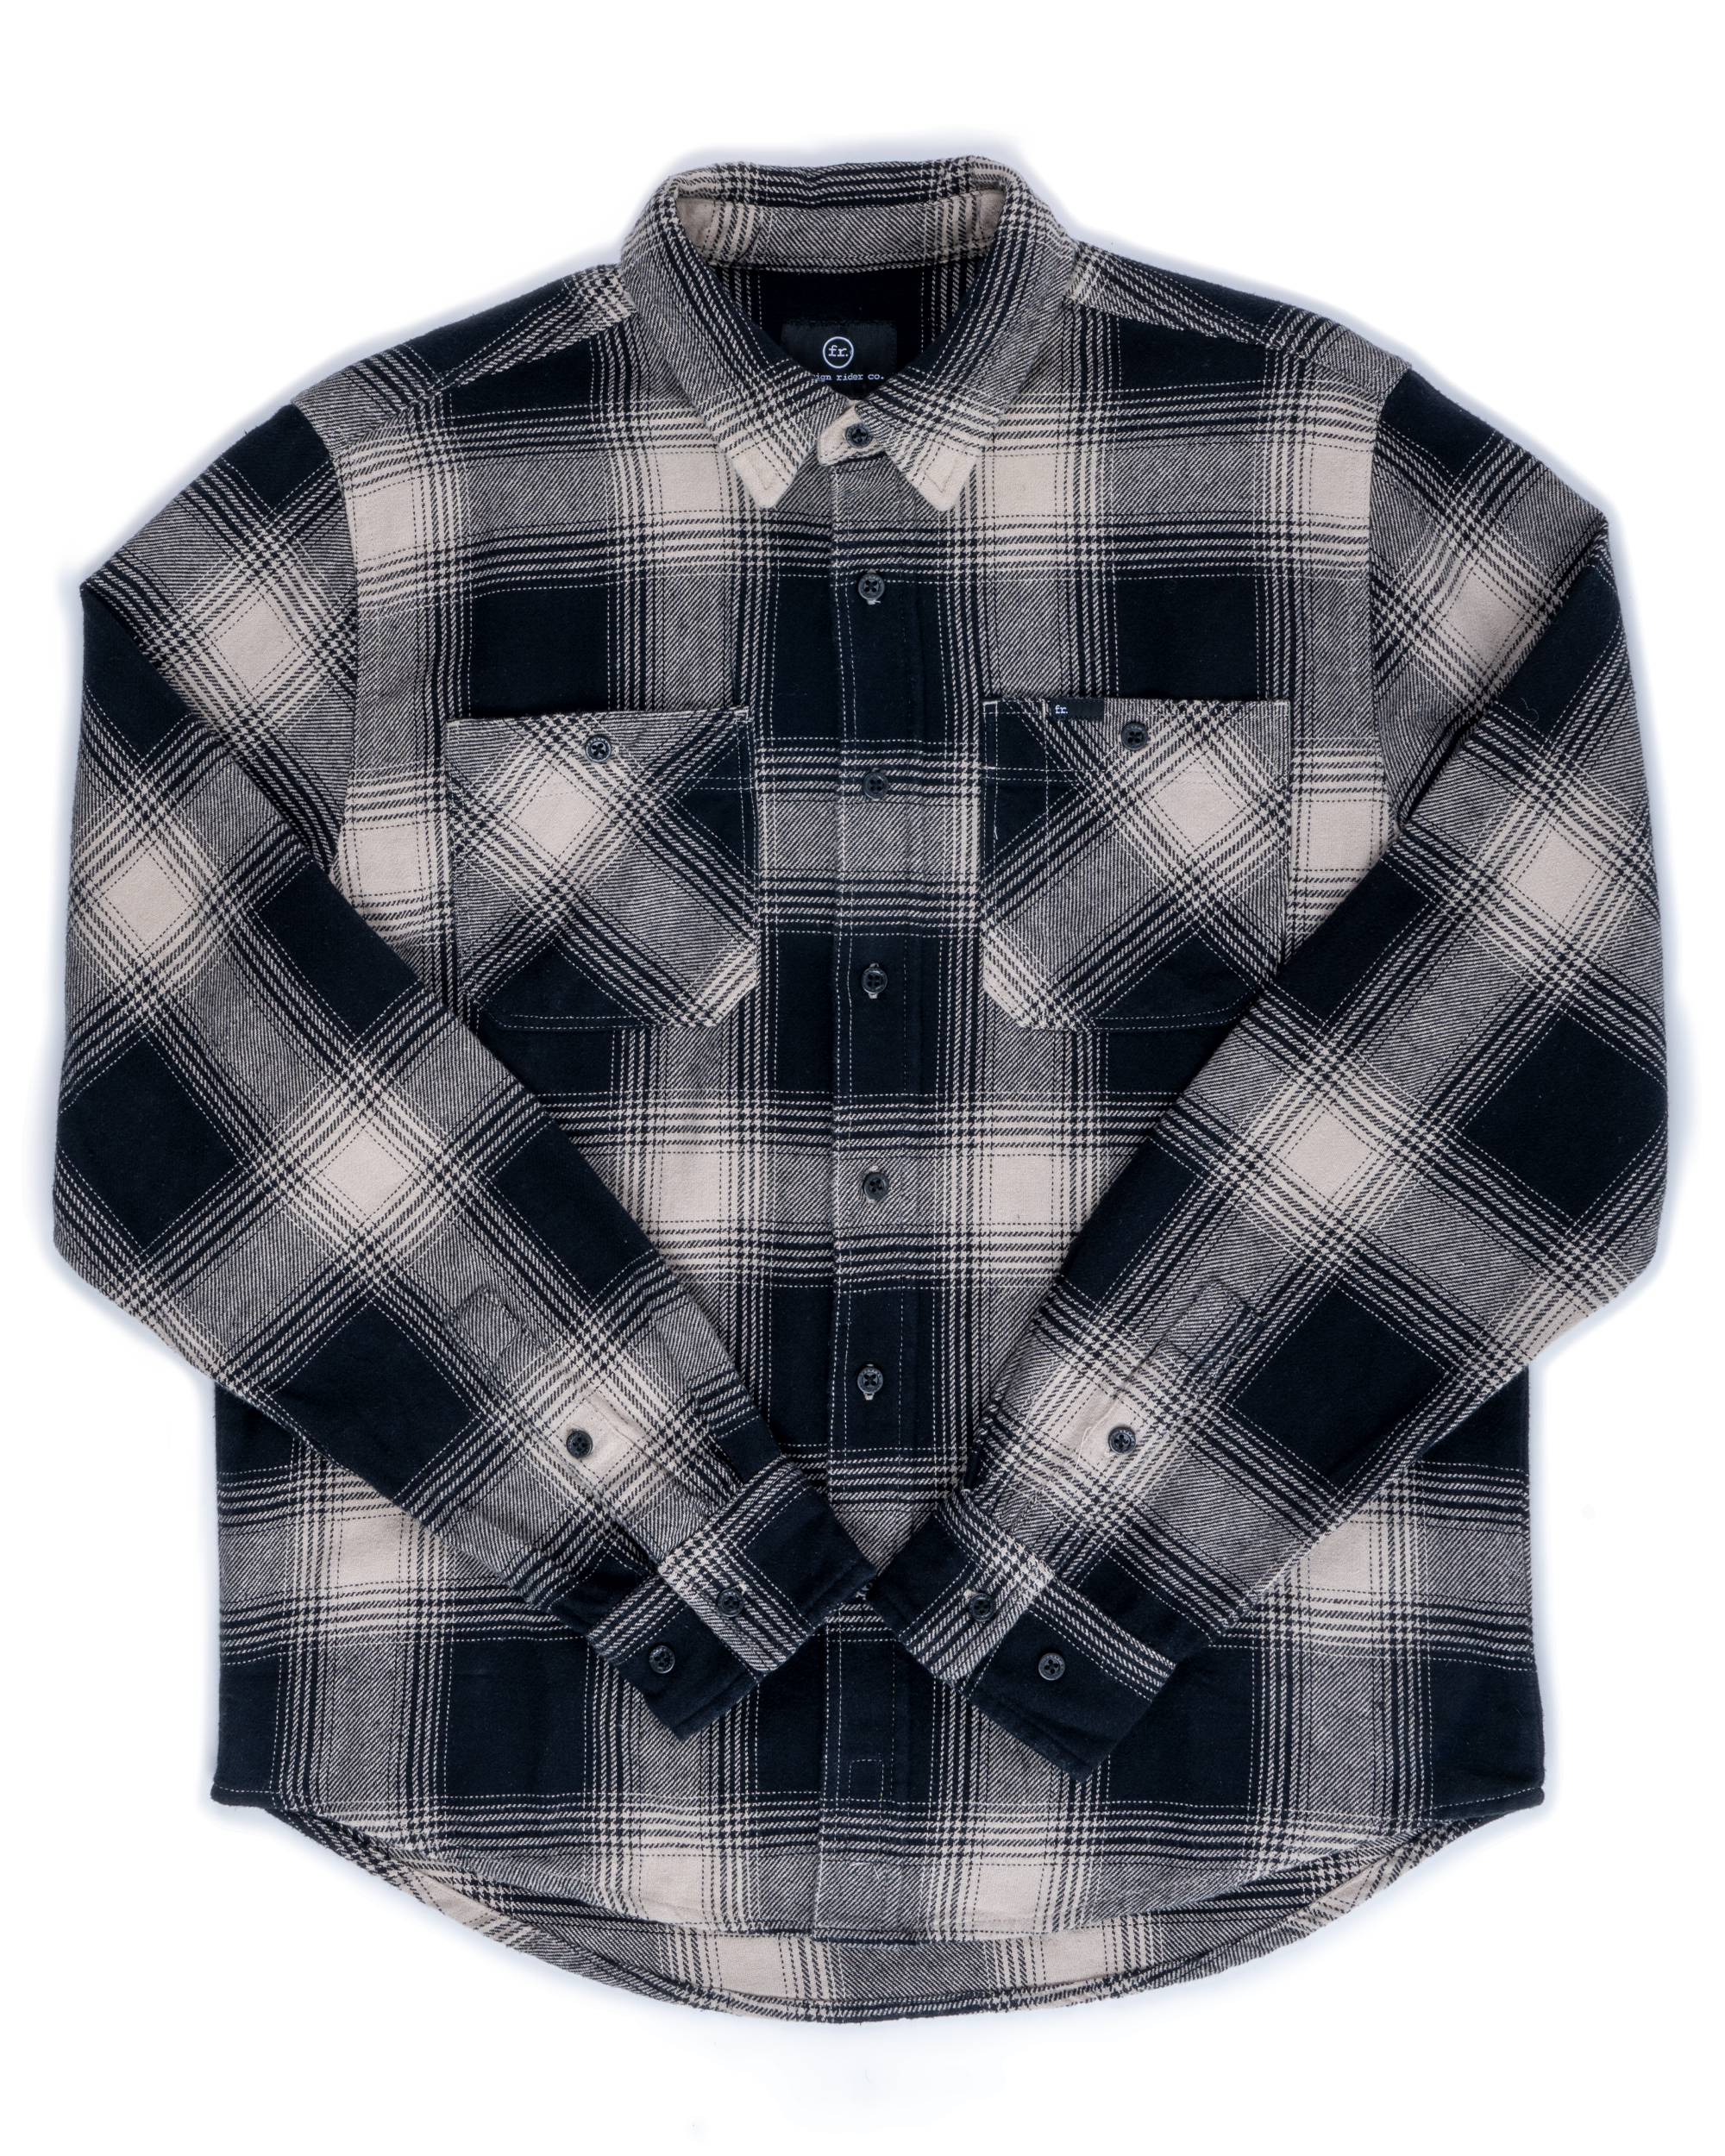 FR. Flannel Plaid Shirt 02 Grey Khaki - Foreign Rider Co.